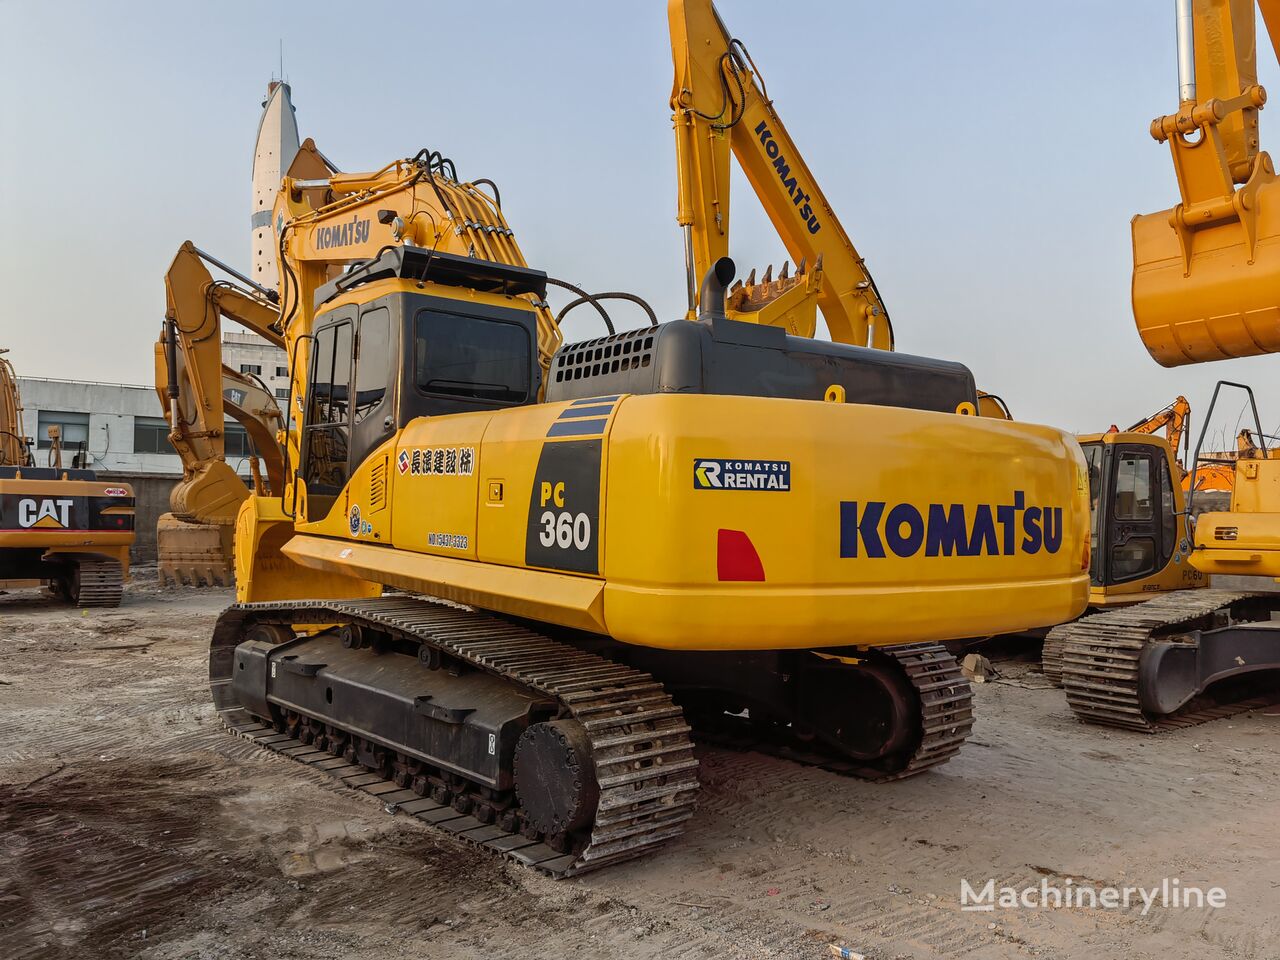 Komatsu PC360-7 tracked excavator